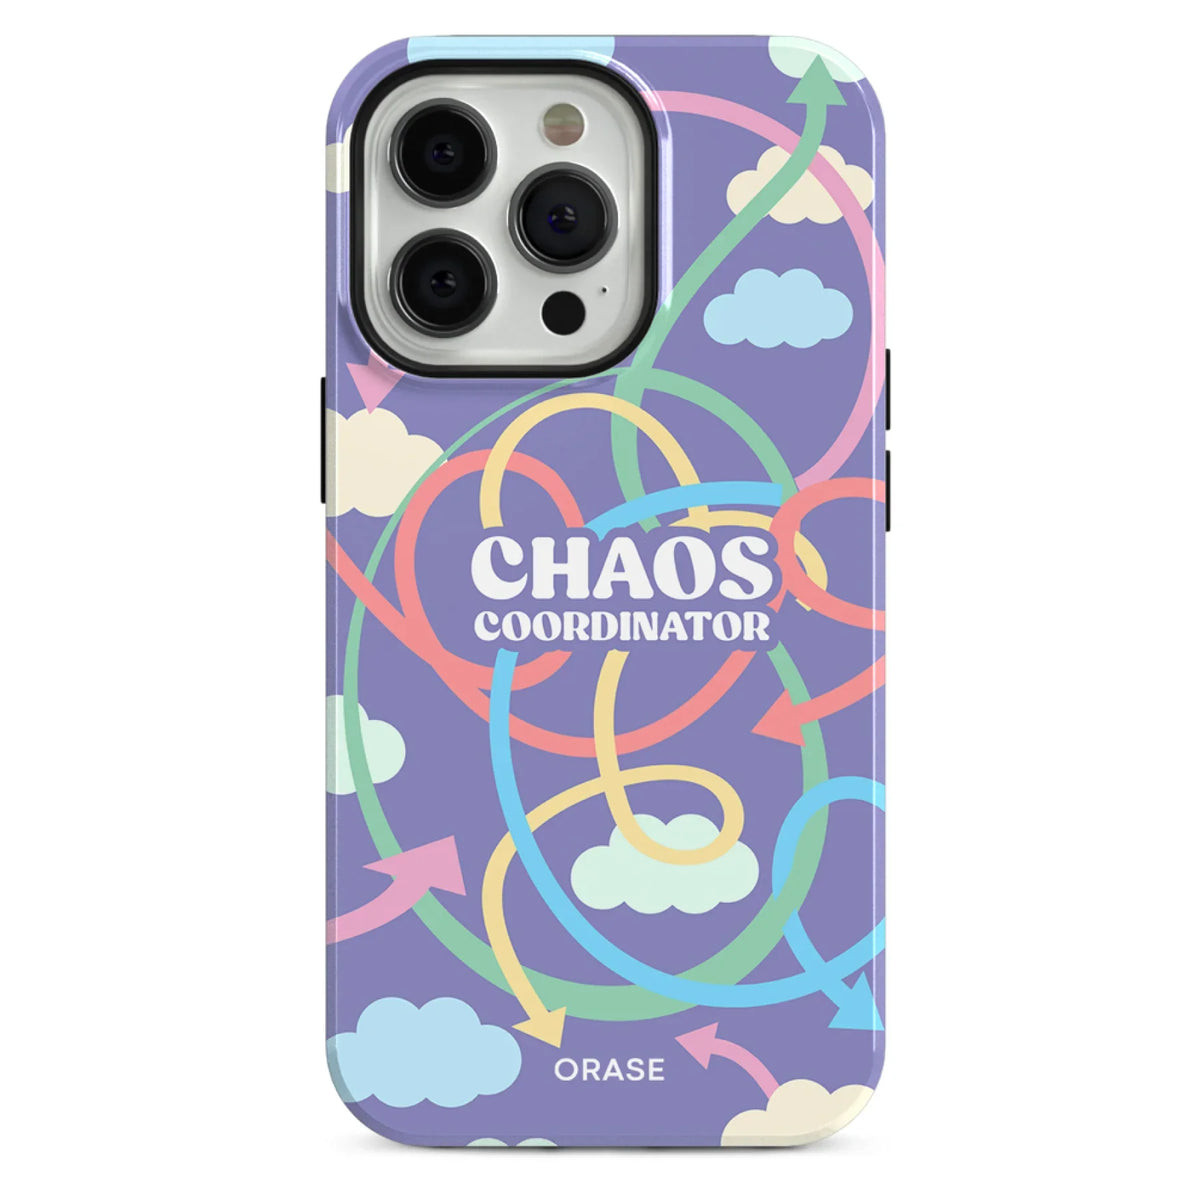 Chaos Coordinator iPhone Case - iPhone 12 Pro